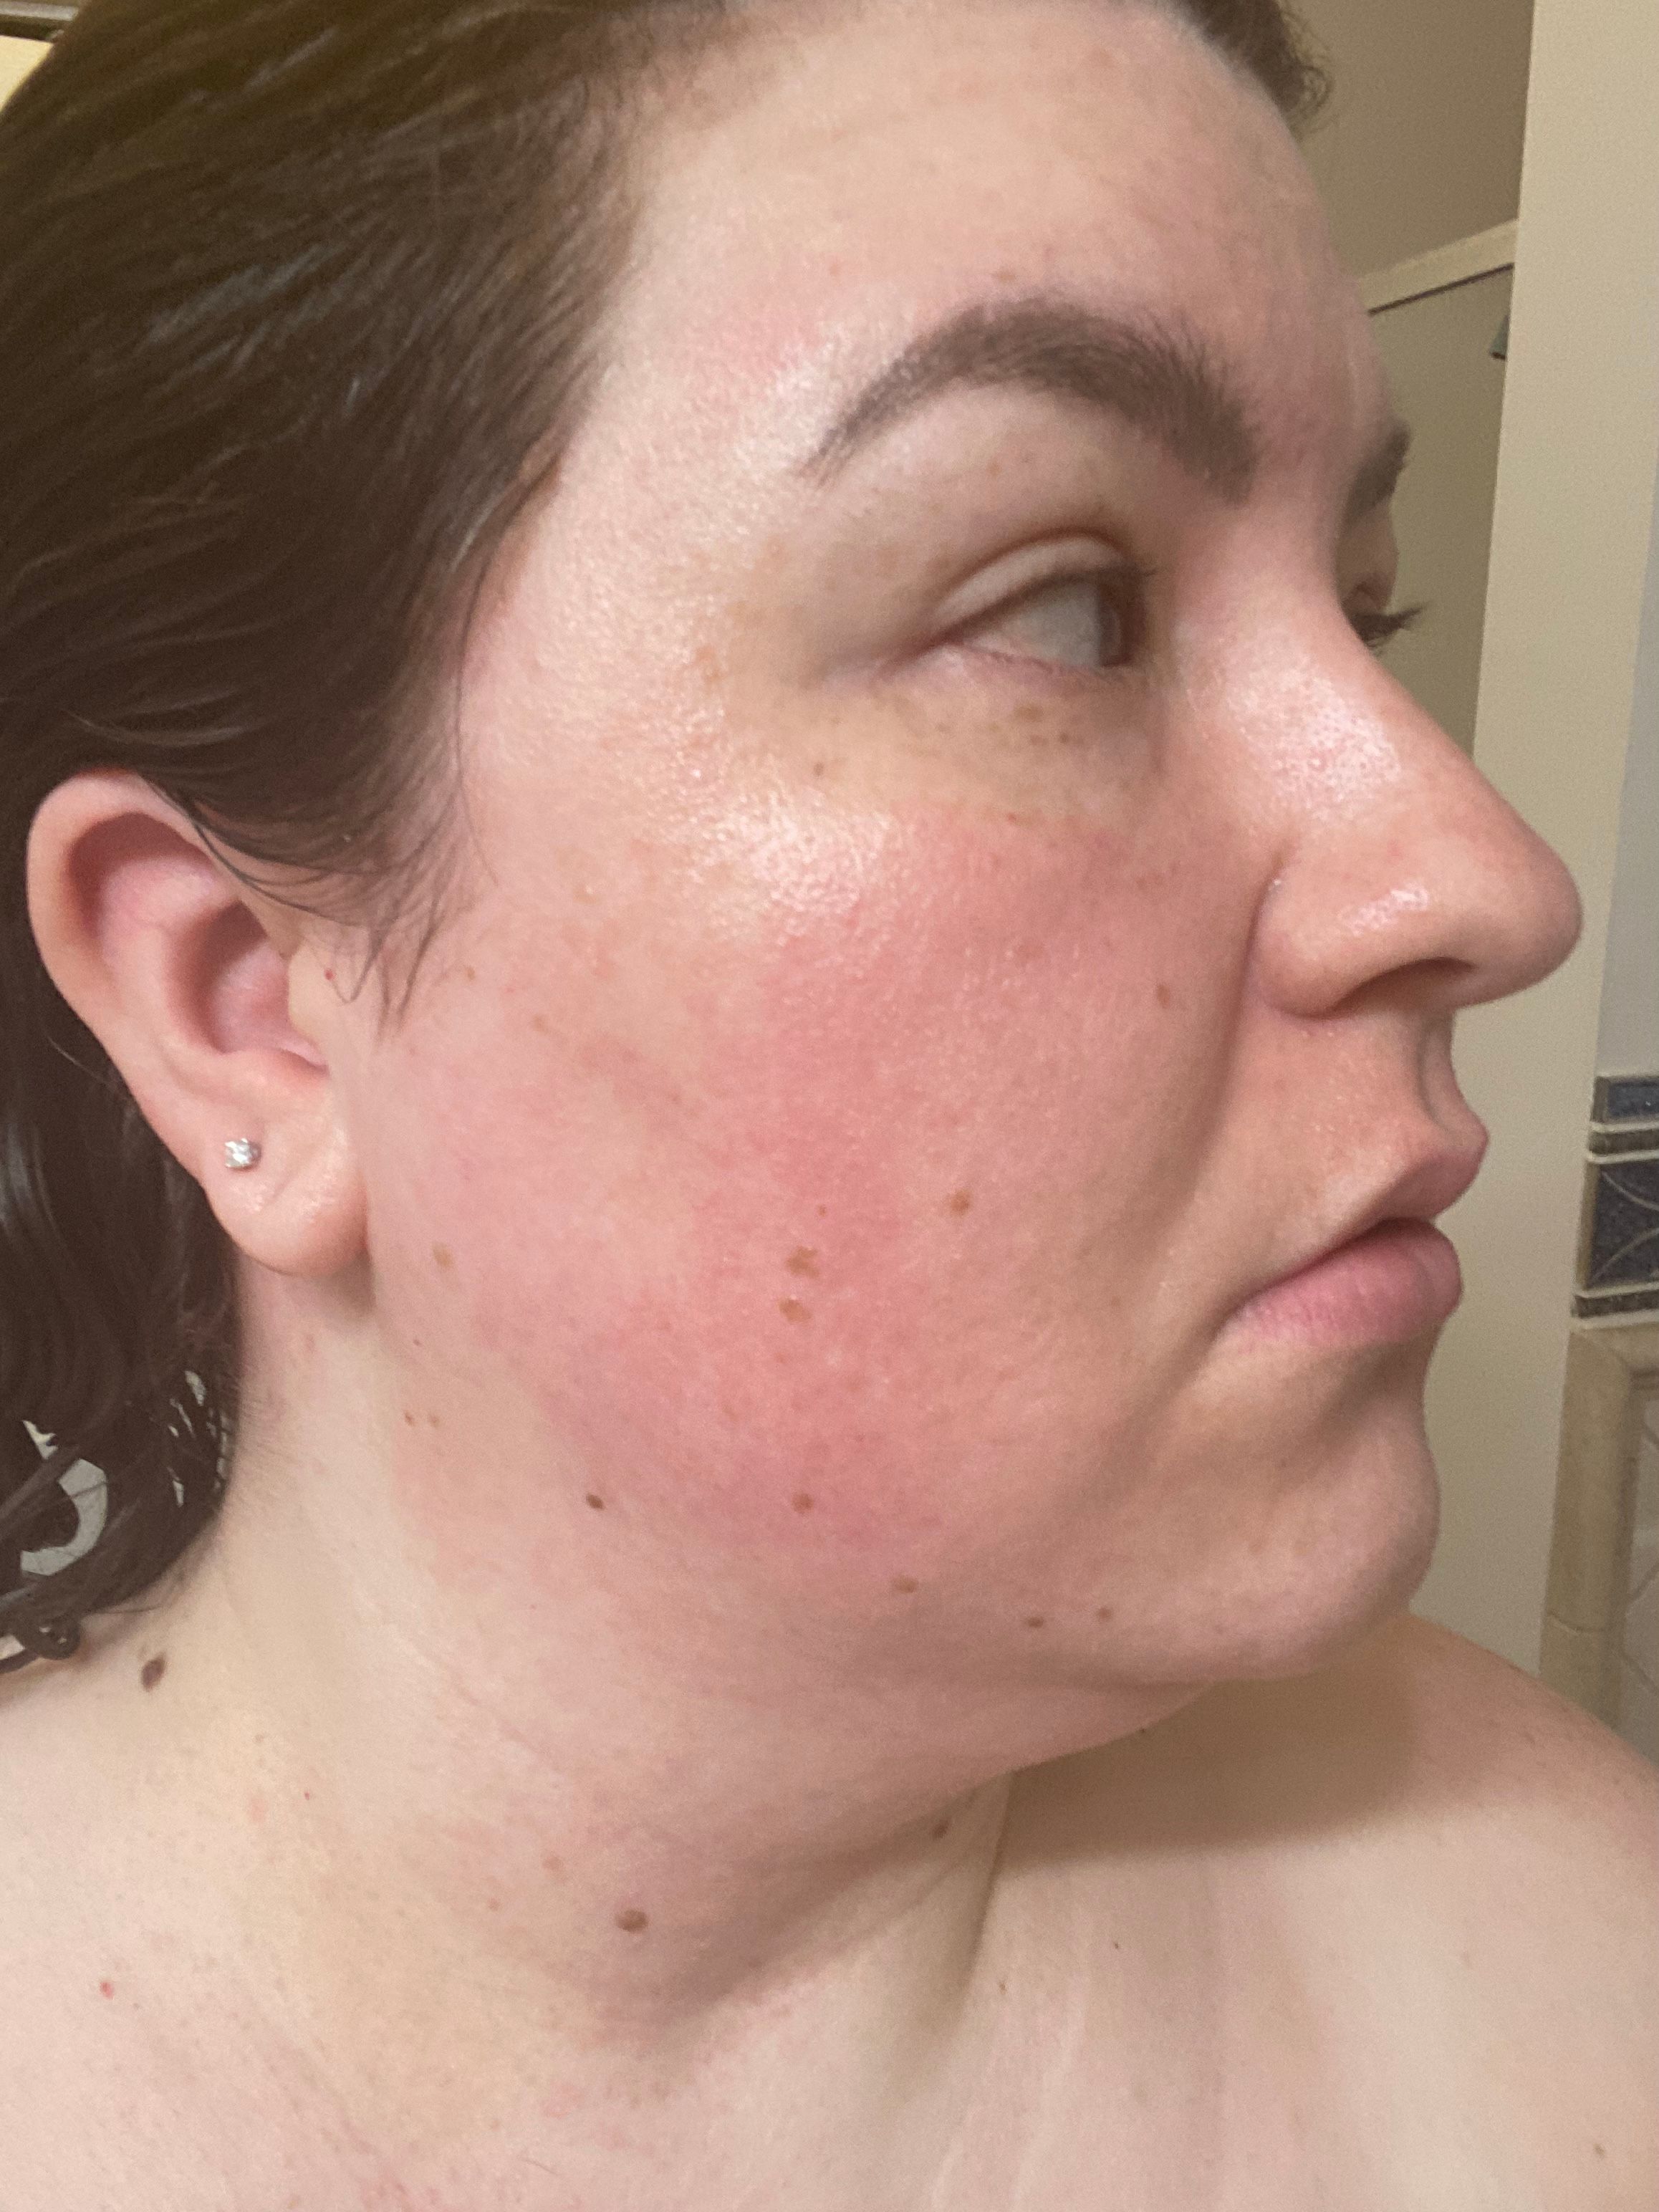 Olaplex 0 - allergic reaction? - Beauty Insider Community